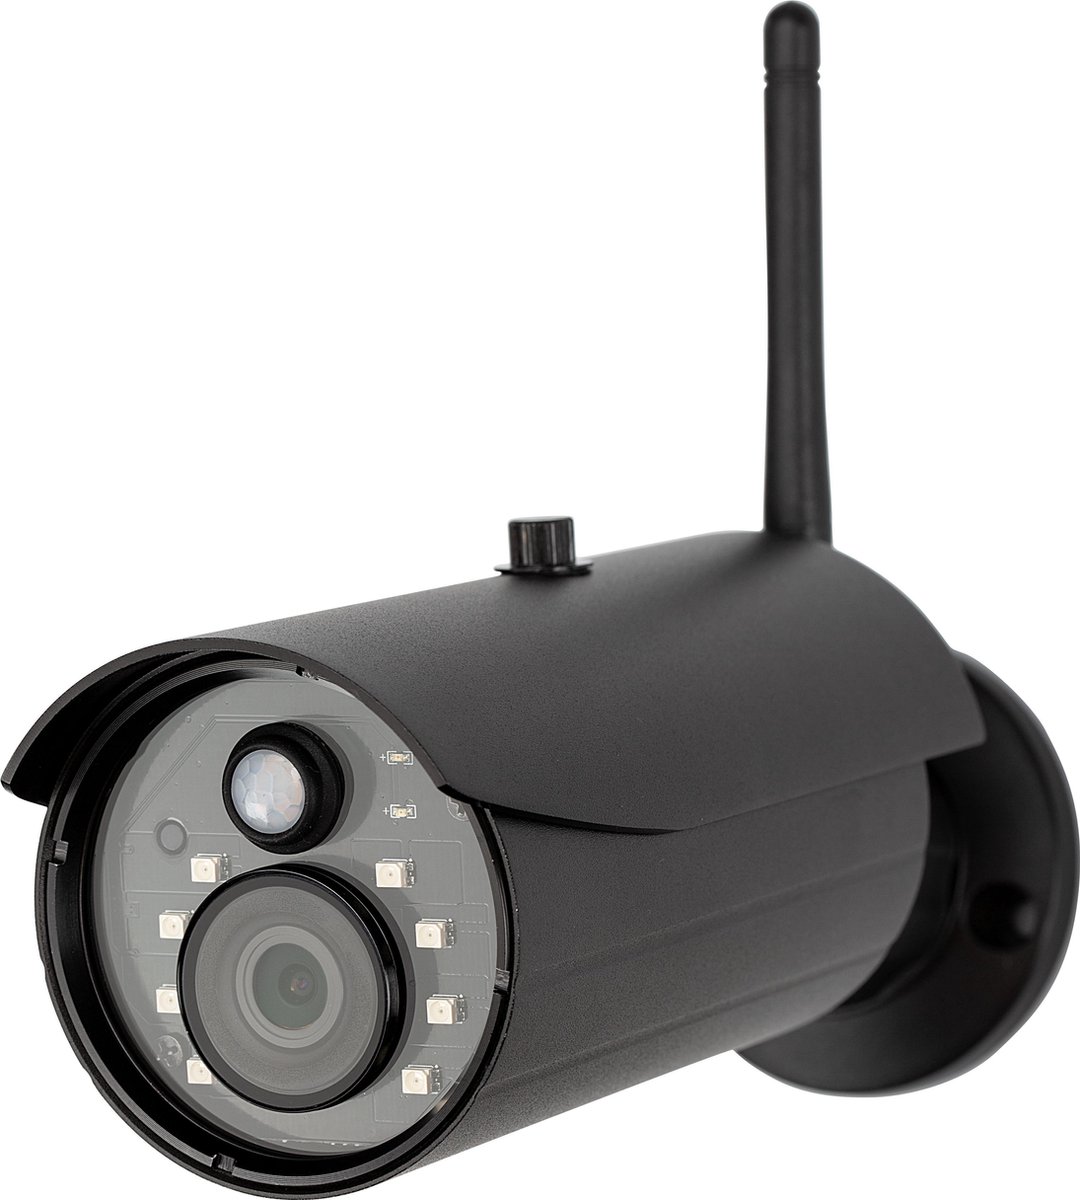 SecuFirst CAM222 IP Camera Bewakingscamera voor buiten - 15M nachtzicht - 1080P